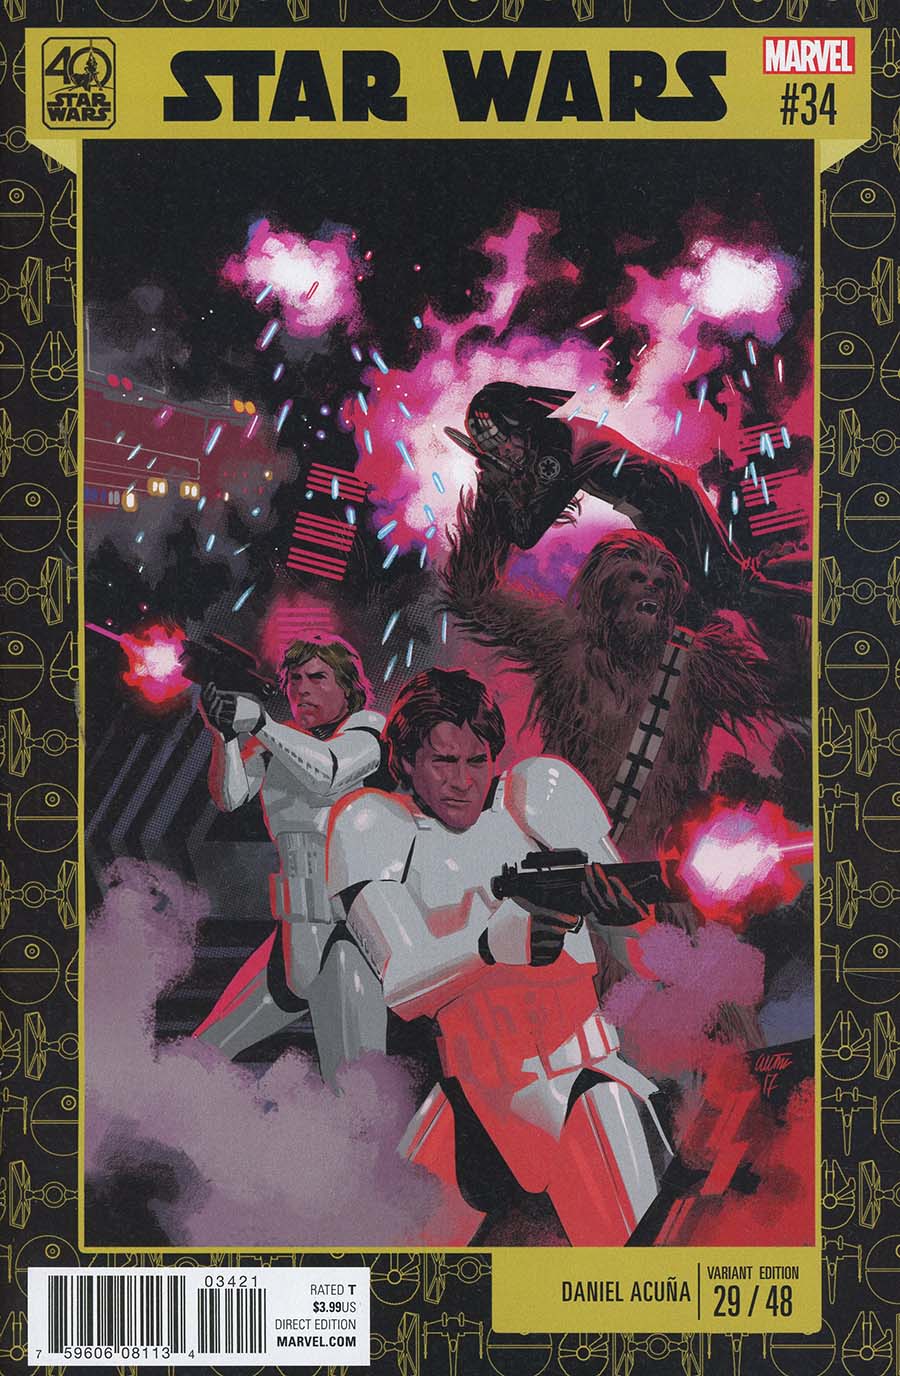 Star Wars Vol 4 #34 Cover B Variant Daniel Acuna Star Wars 40th Anniversary Cover